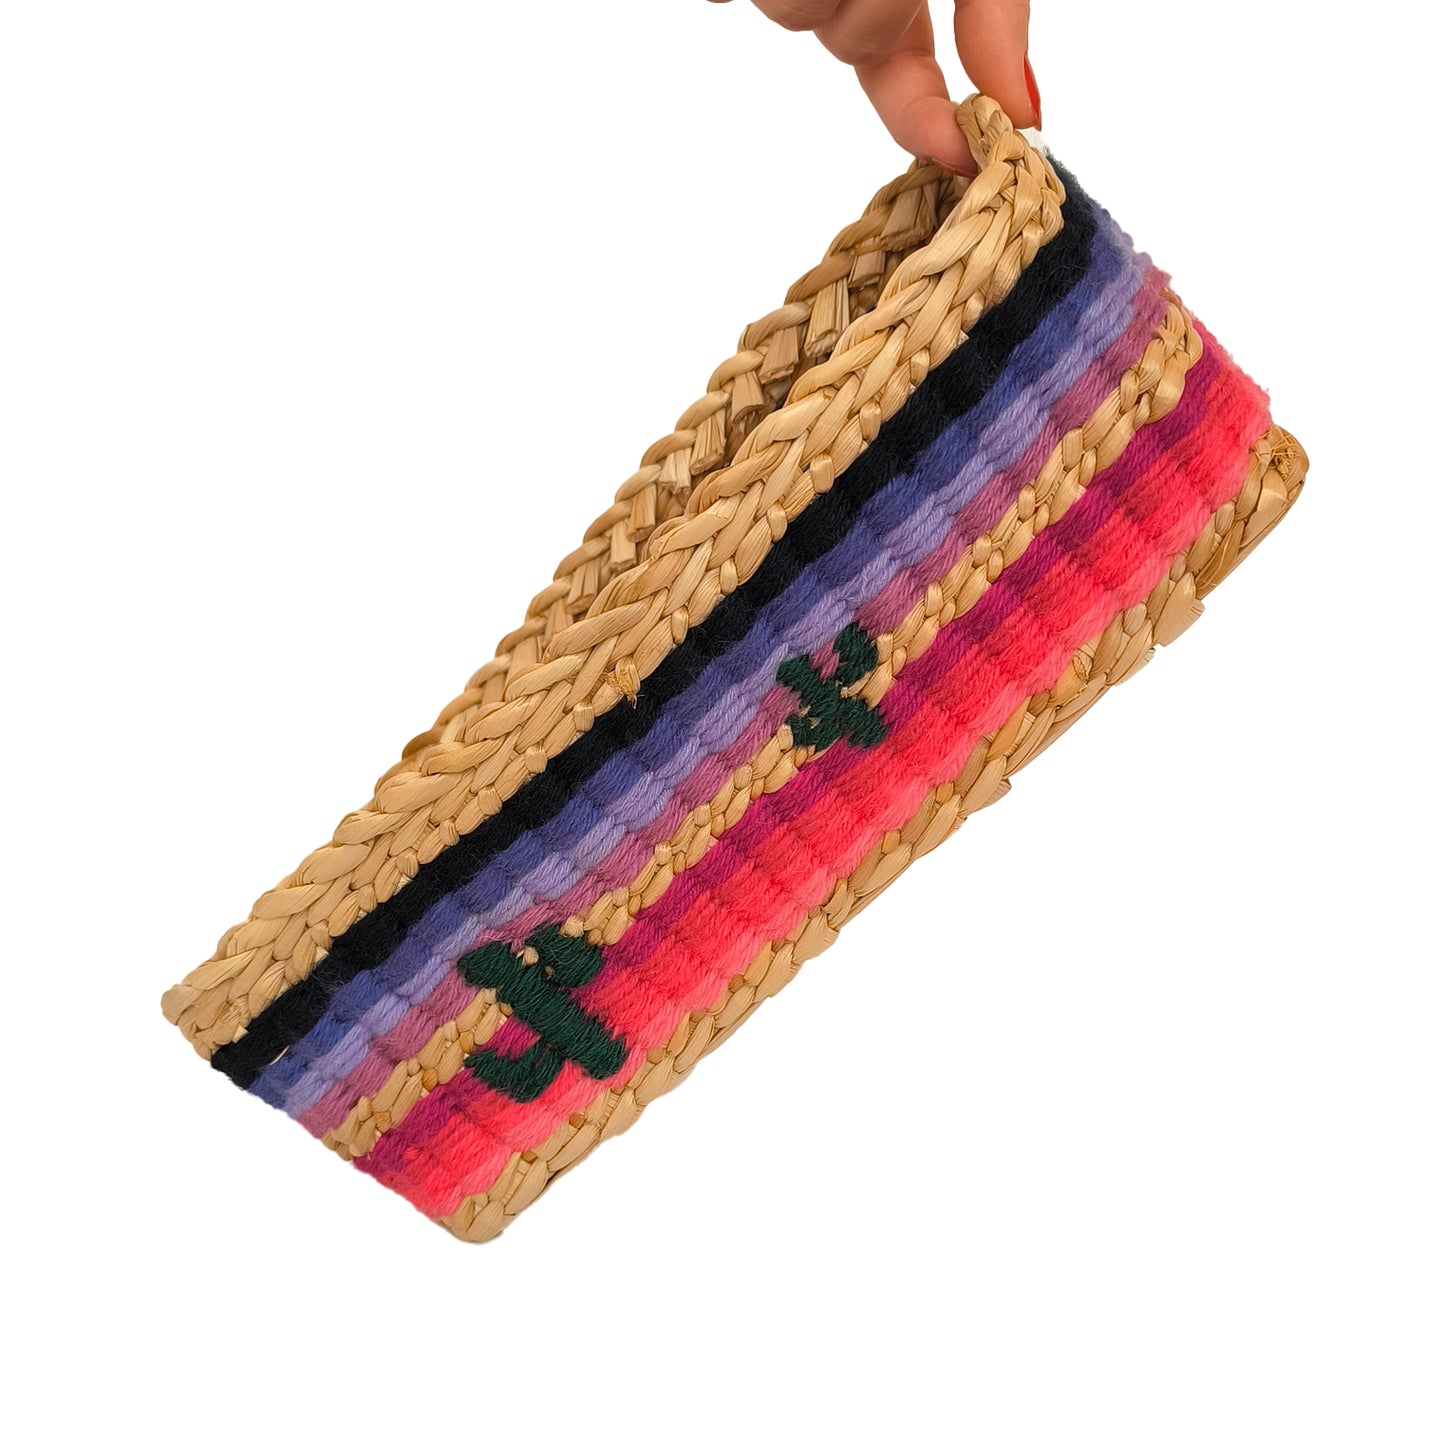 Handmade Rectangular Basket